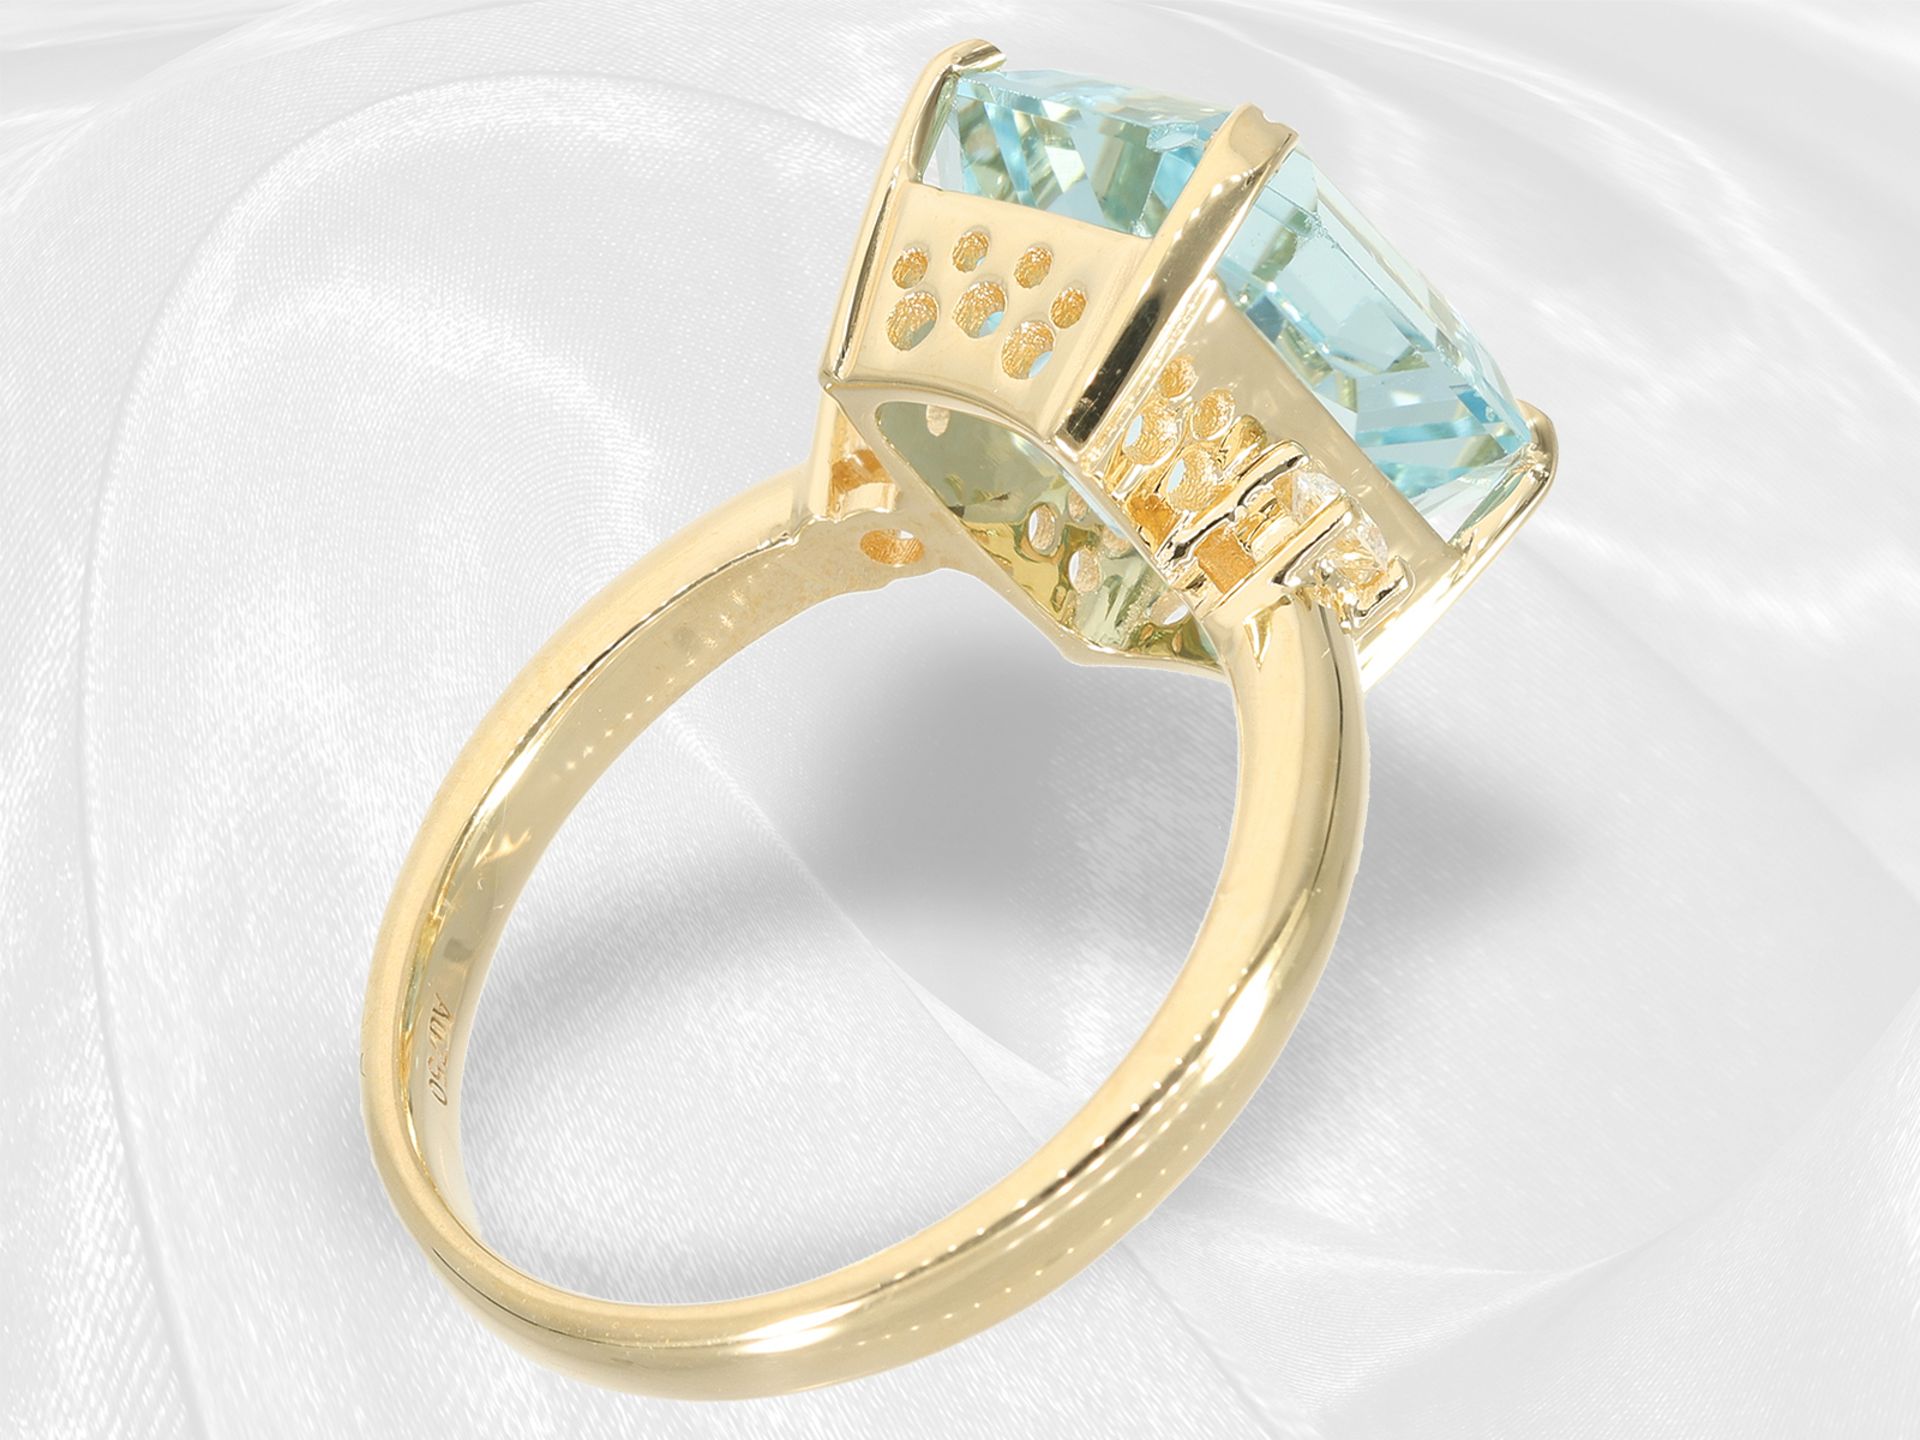 Aquamarine/brilliant-cut diamond goldsmith ring, 18K yellow gold - Image 5 of 5